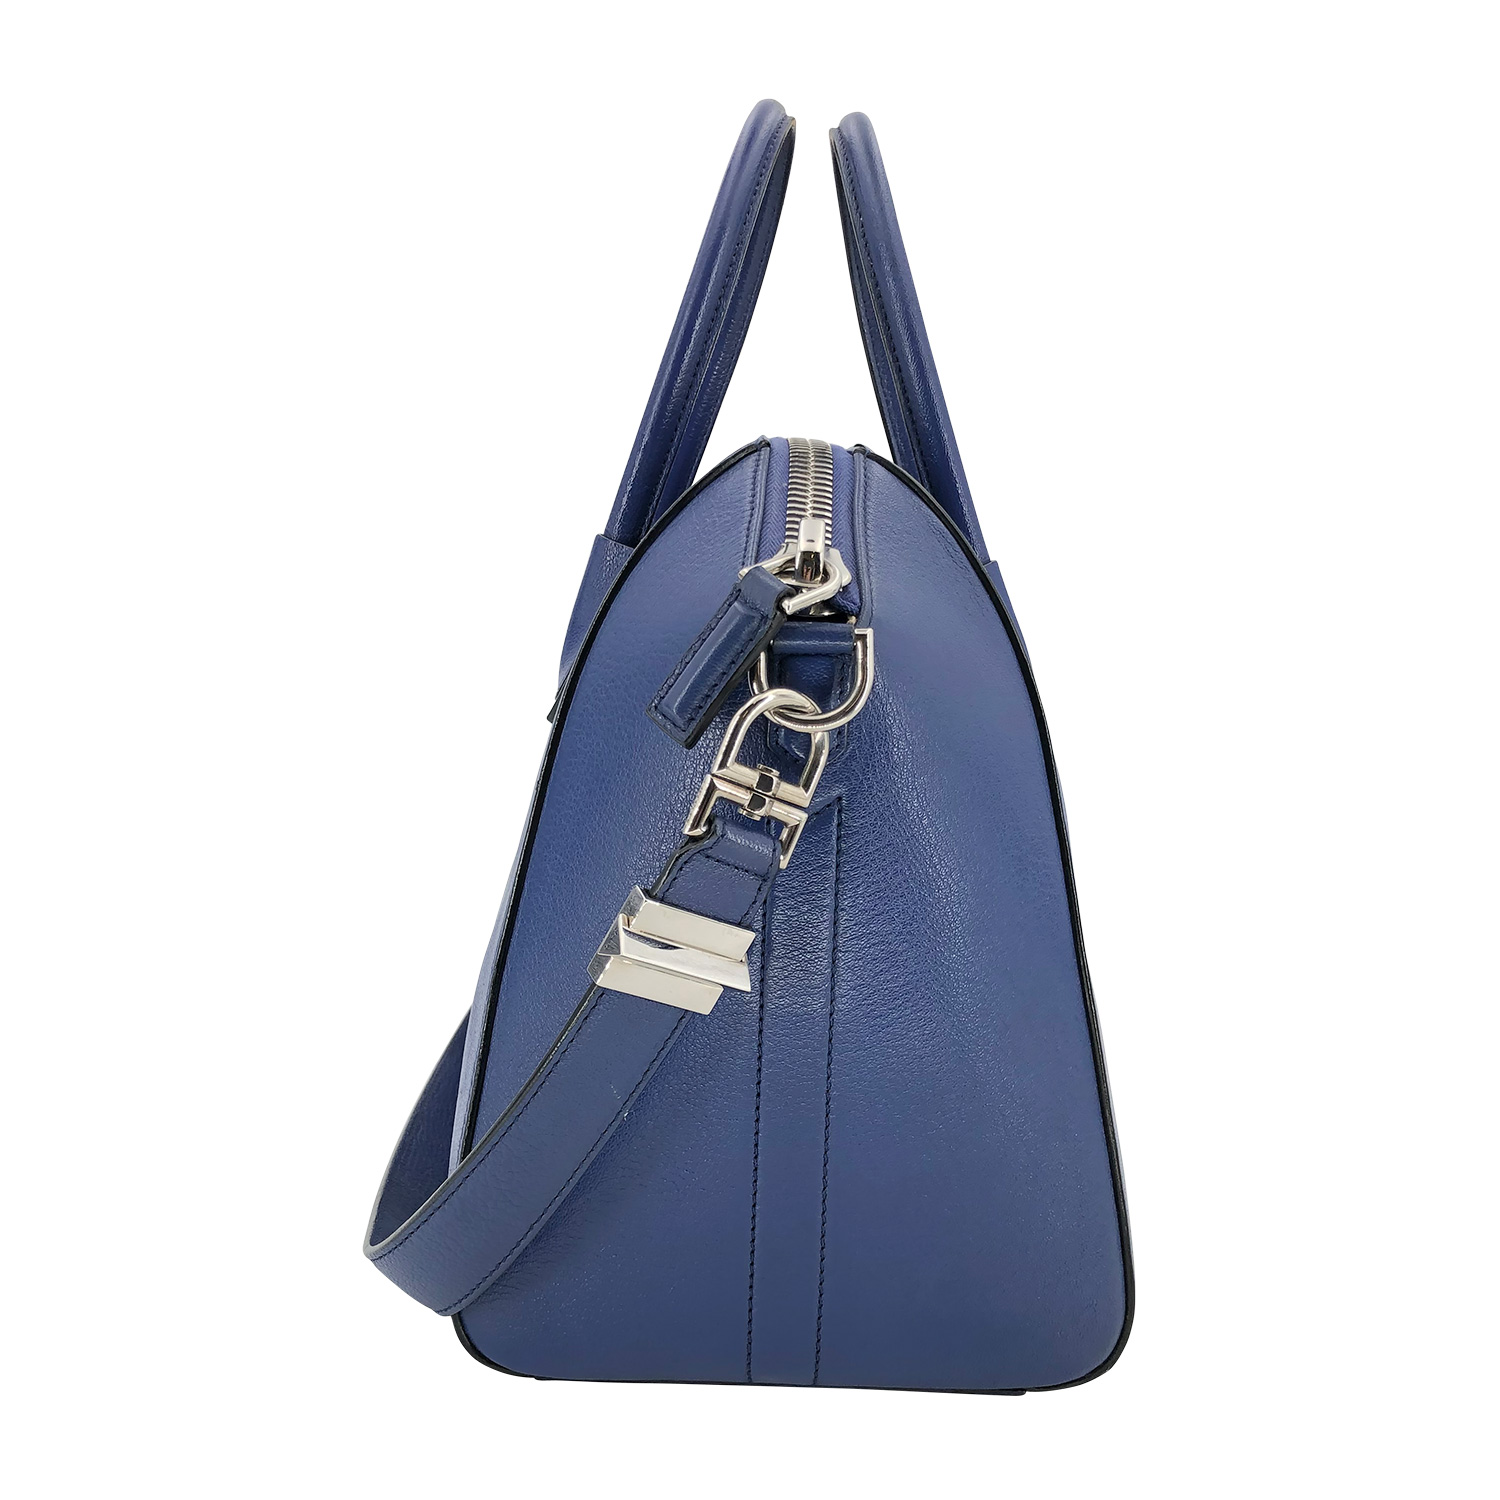 Givenchy - Antigona Small Grained Leather Bag Baby Blue